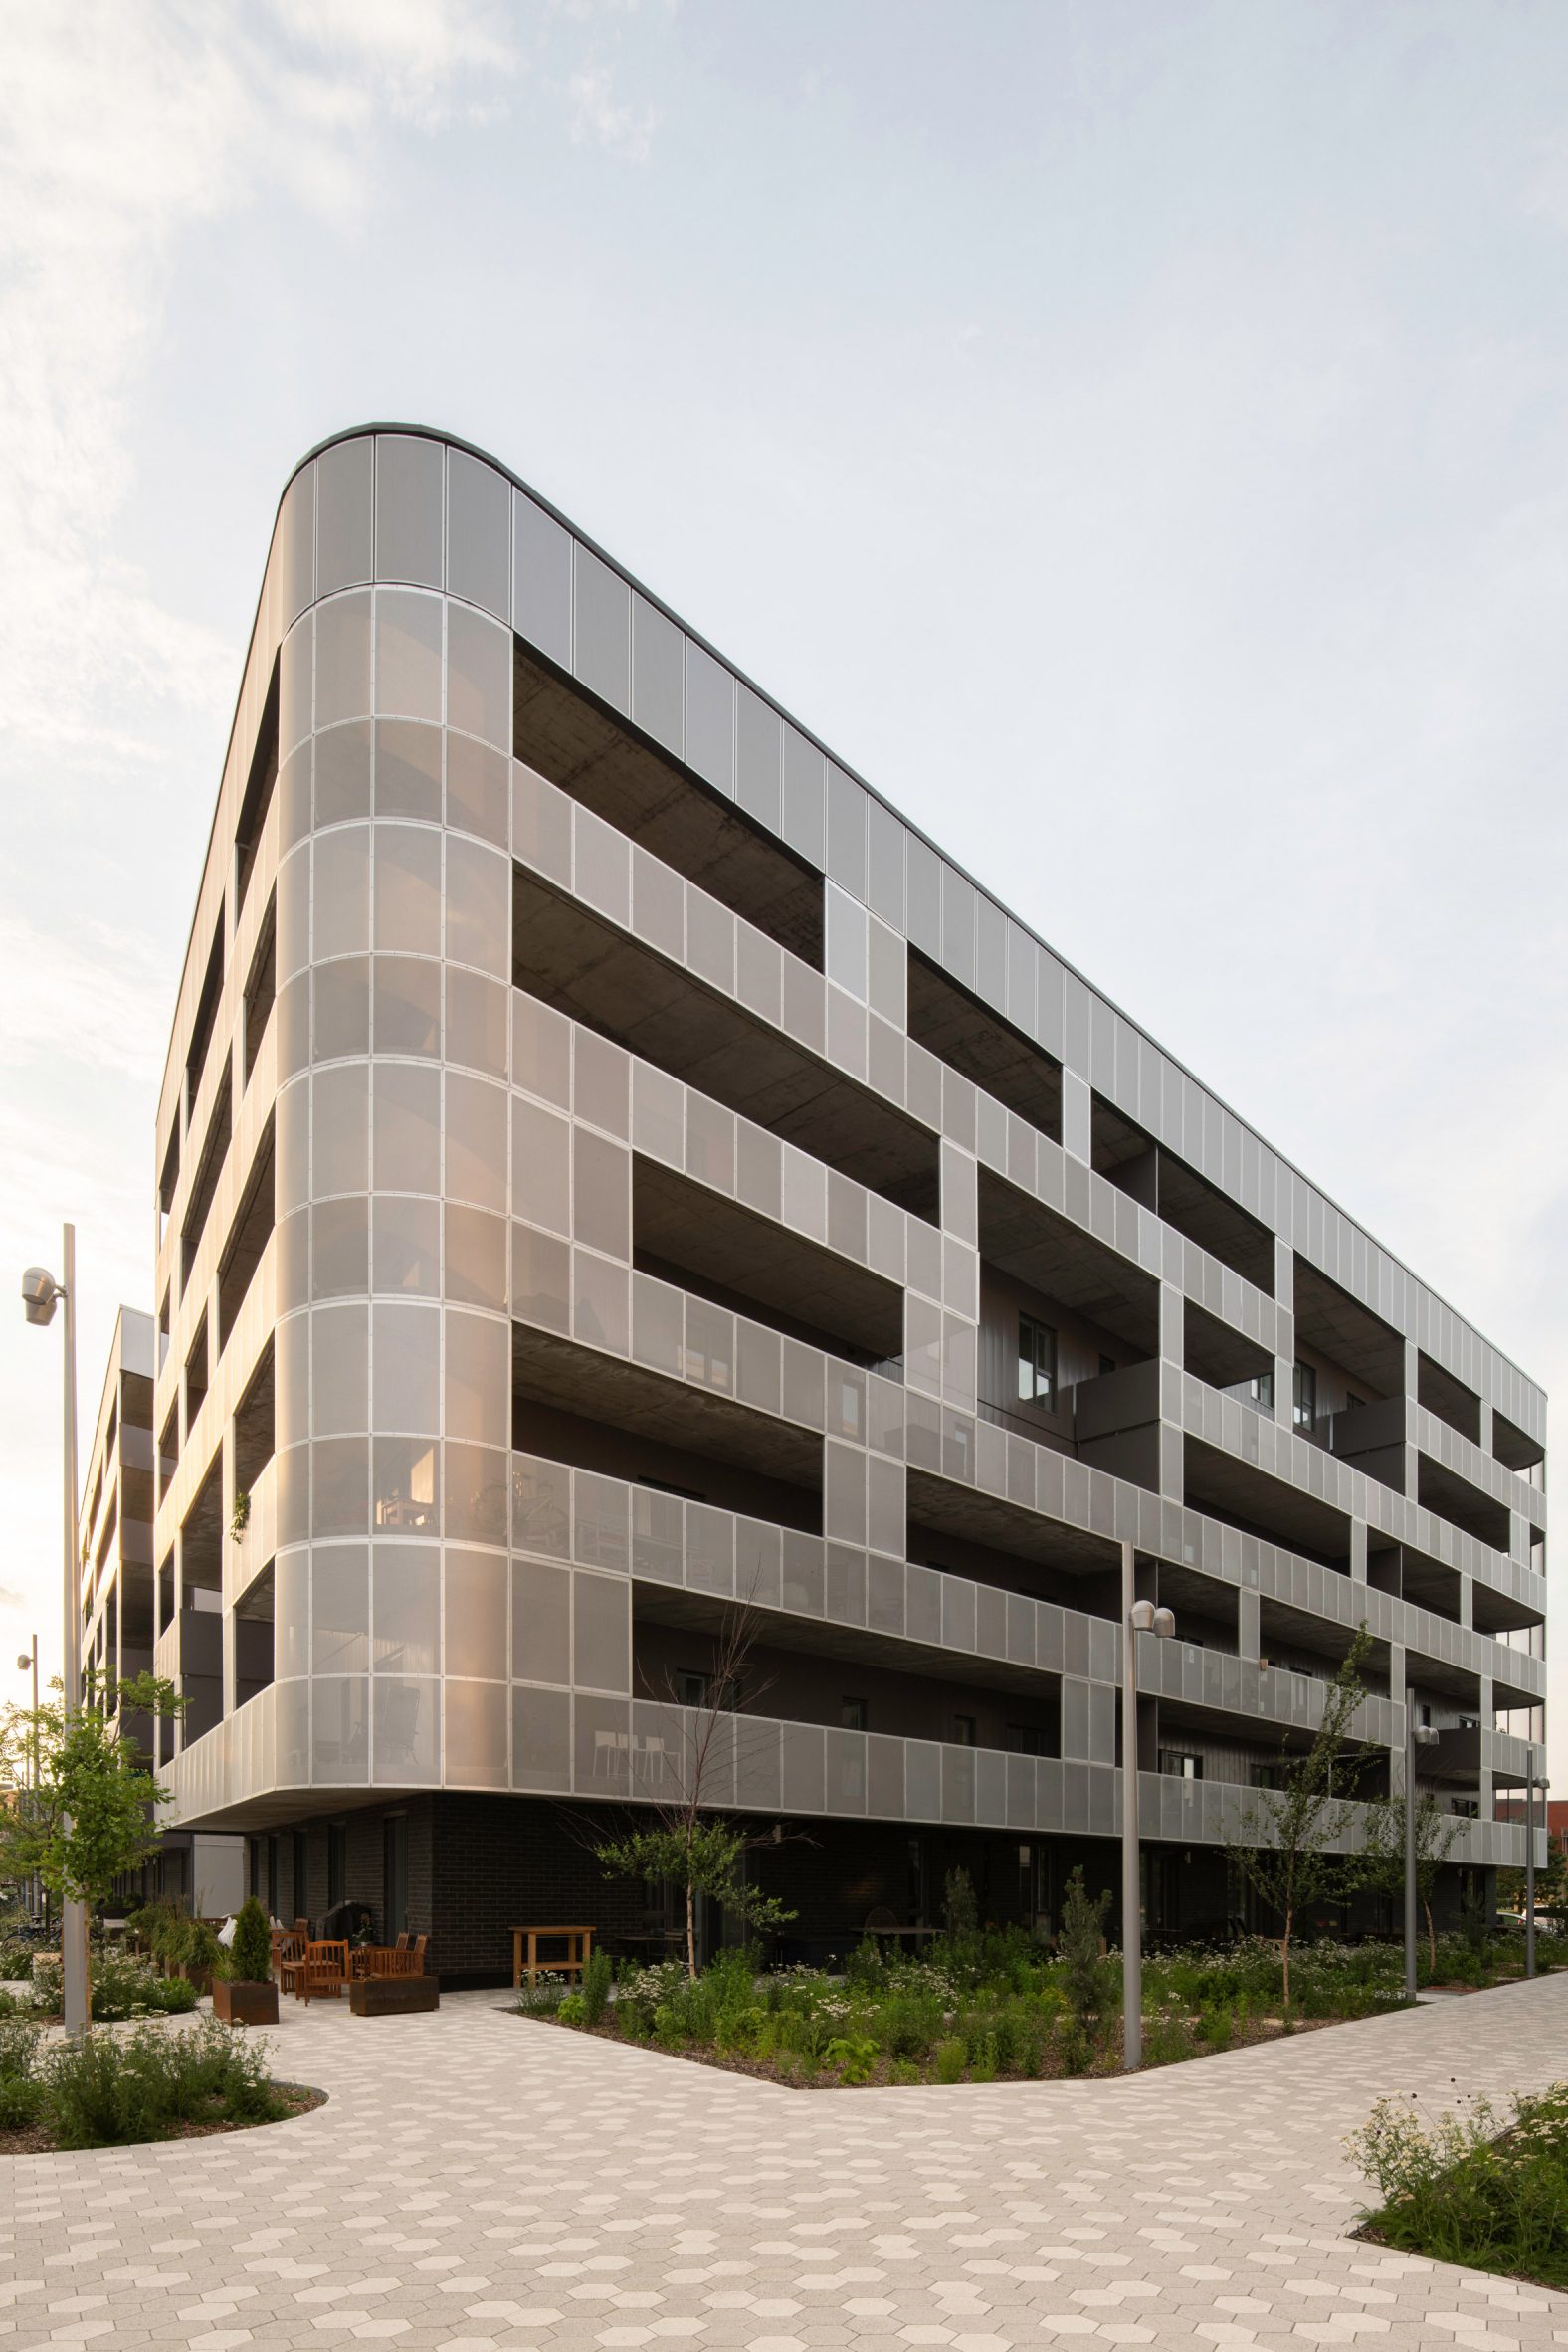 Metal mesh facade on apartment building